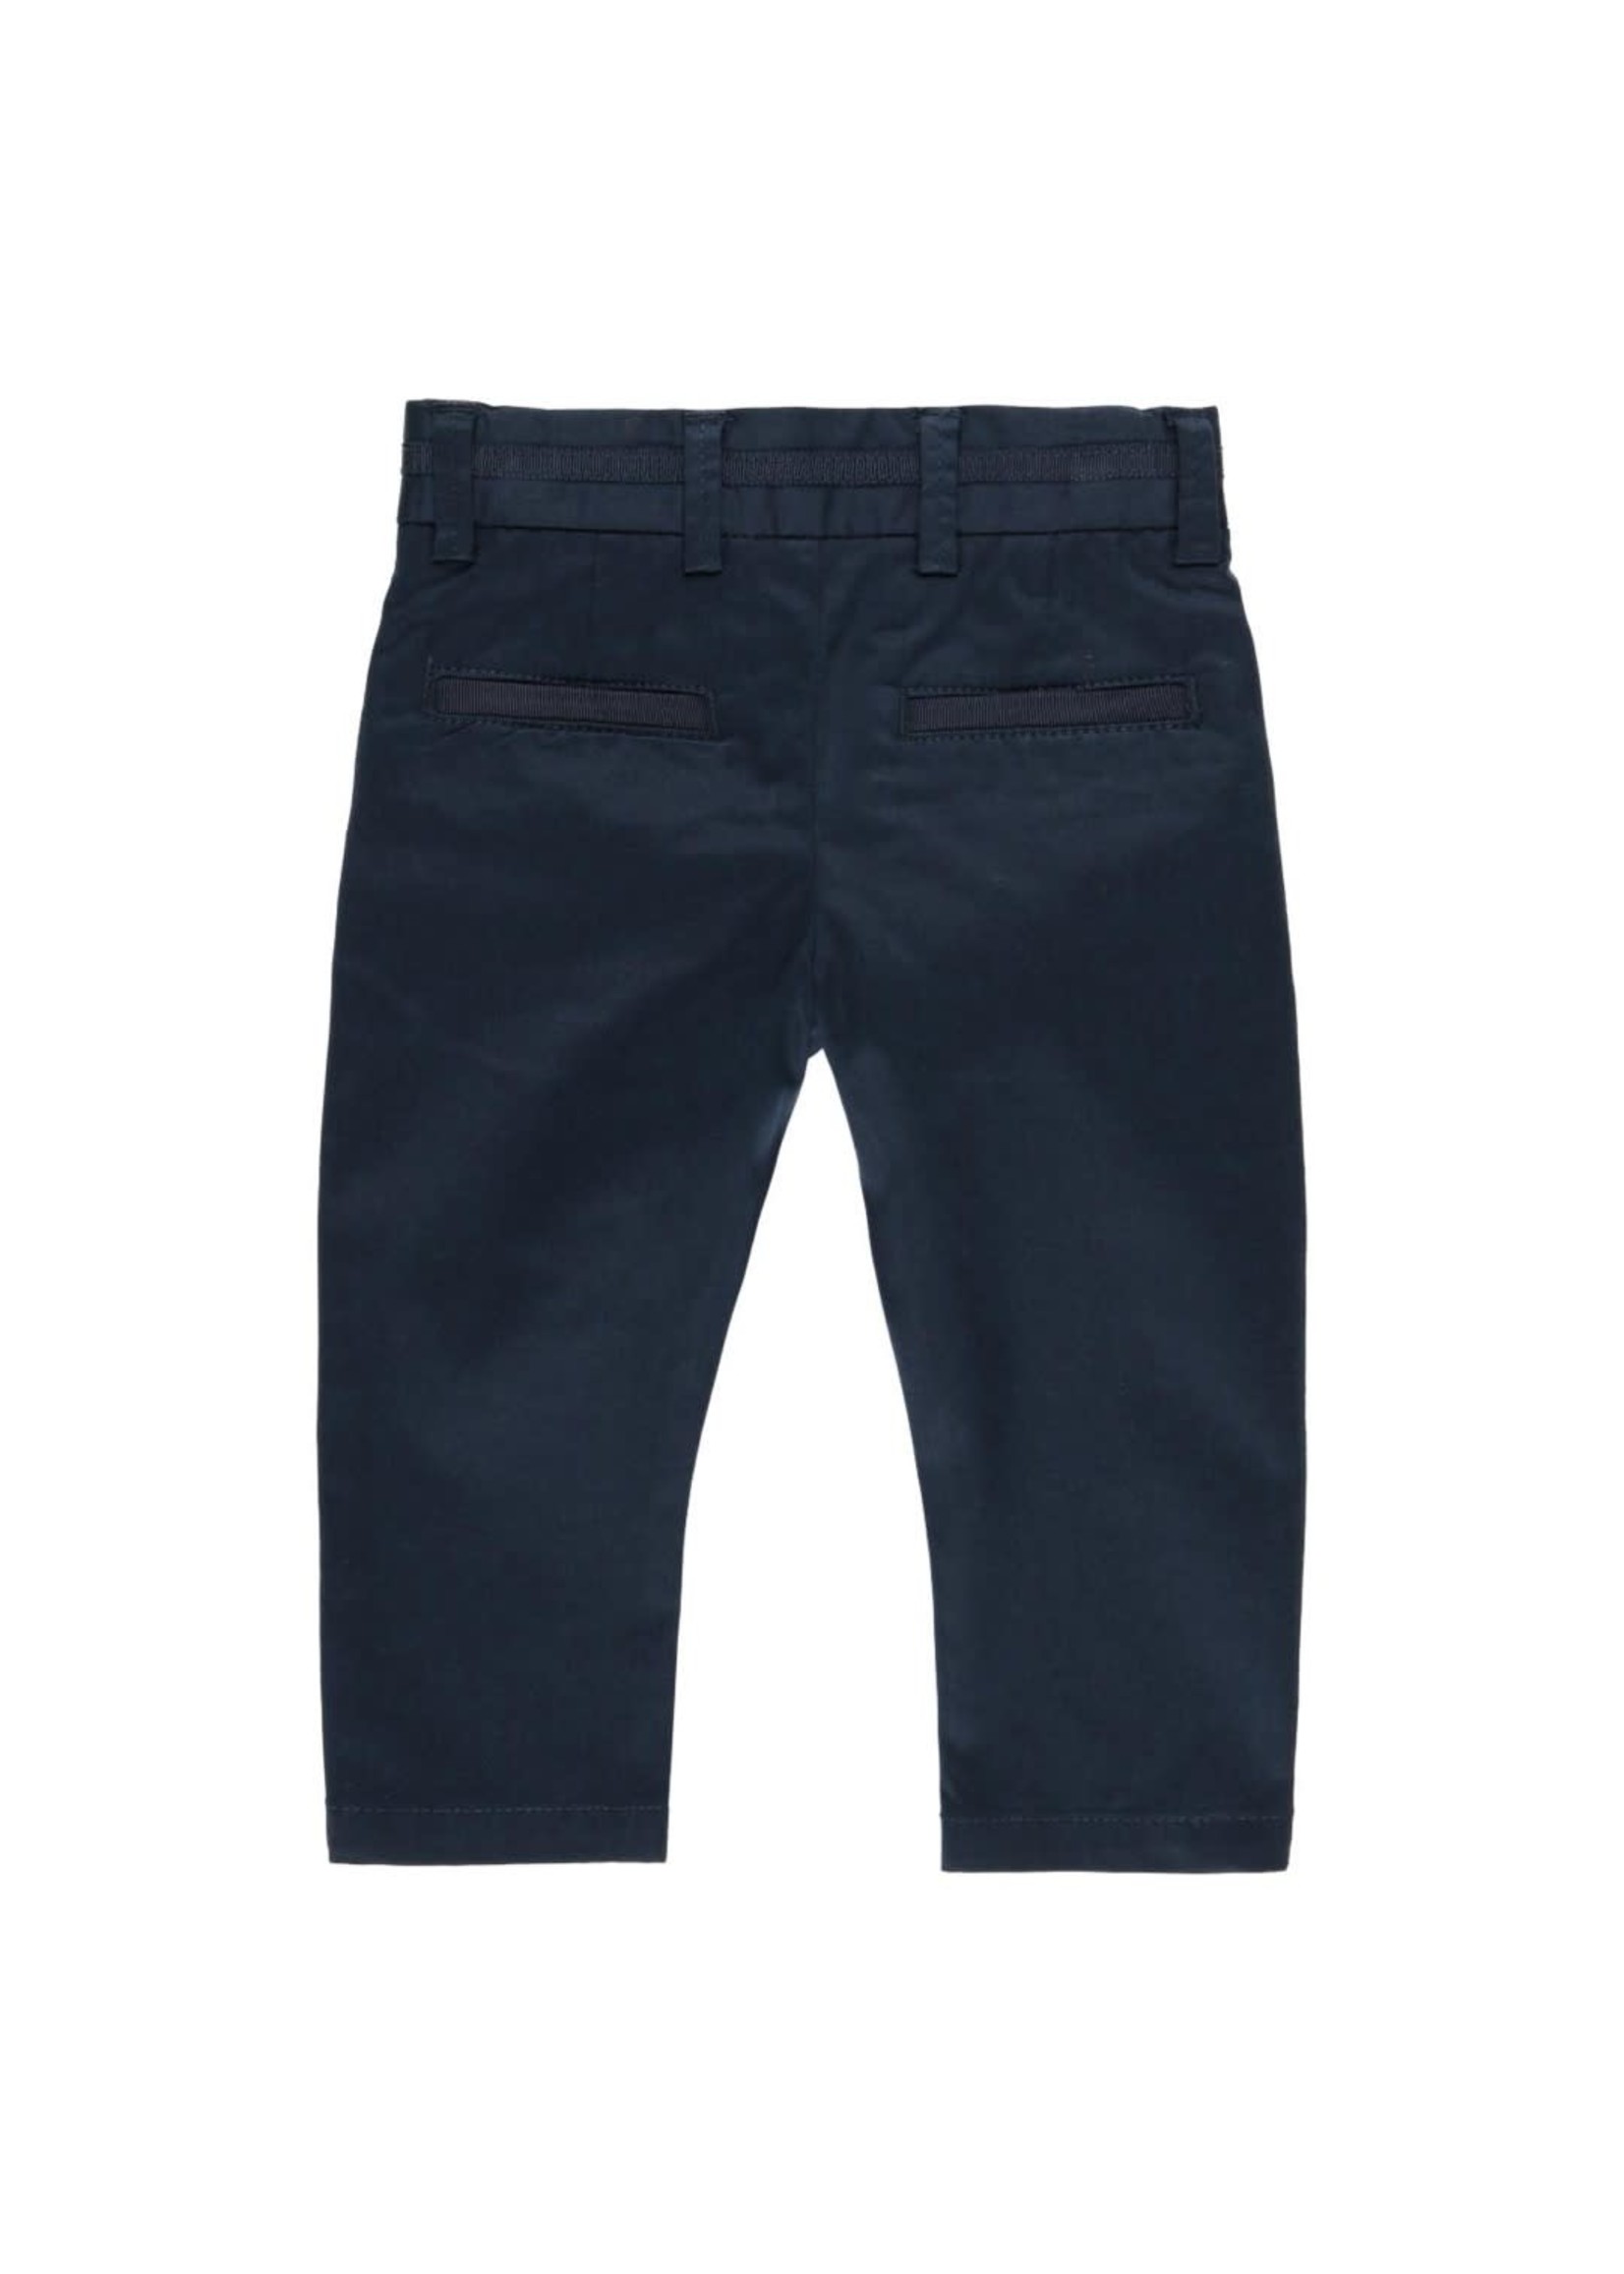 Boboli Stretch satin trousers for baby boy NAVY 712178